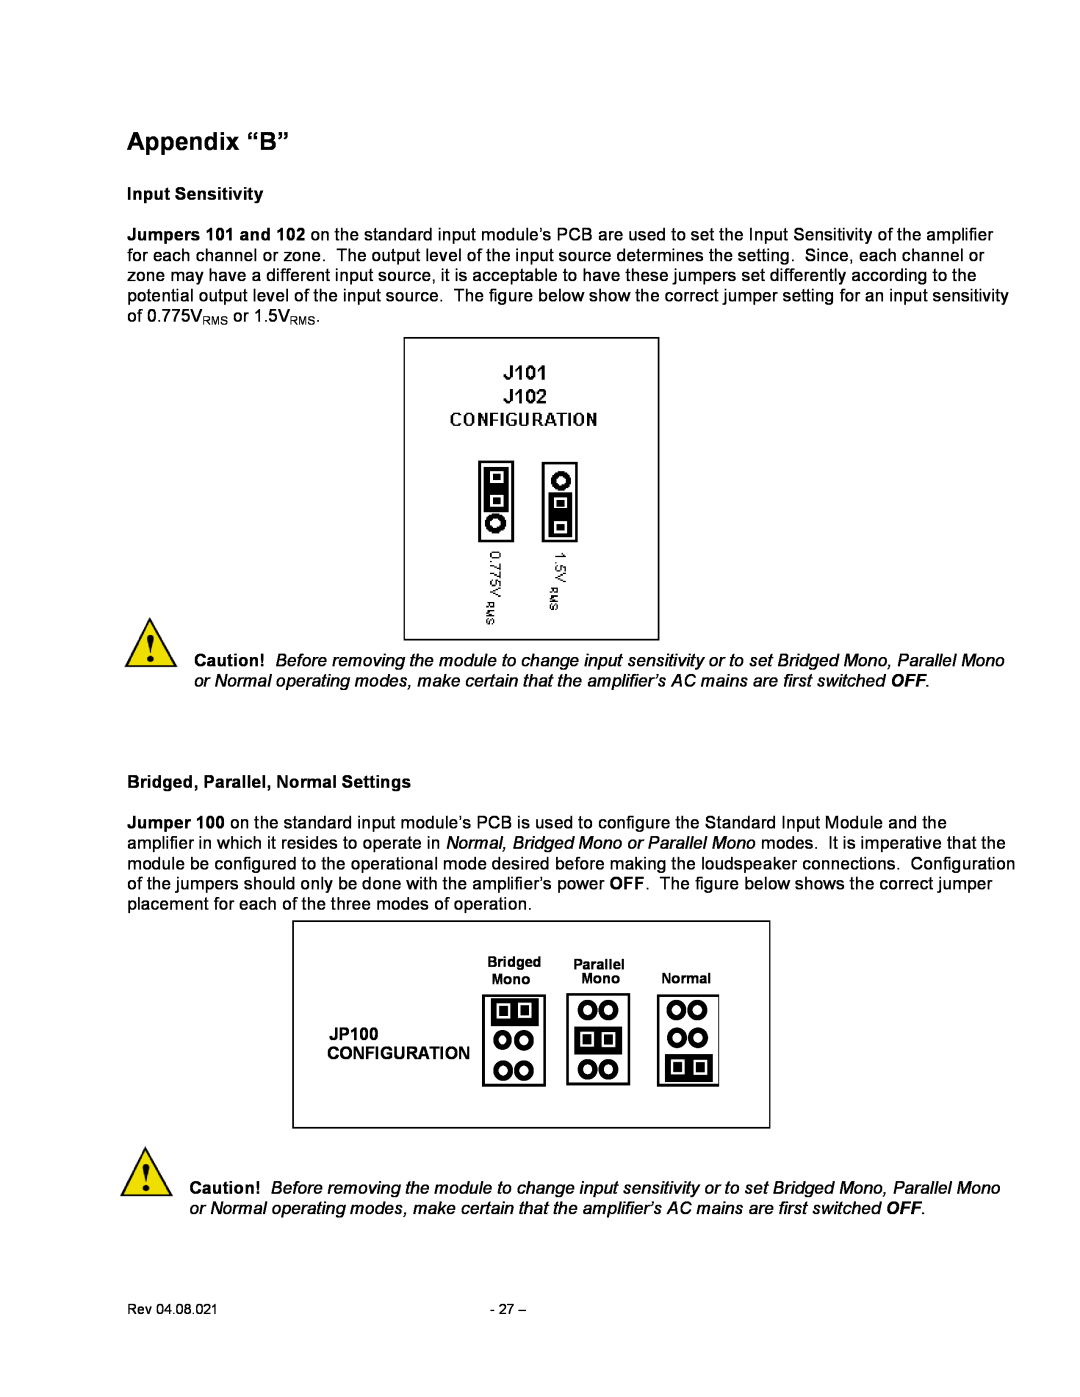 Carver CV Series user manual Appendix “B”, Input Sensitivity, Bridged, Parallel, Normal Settings, JP100 CONFIGURATION 